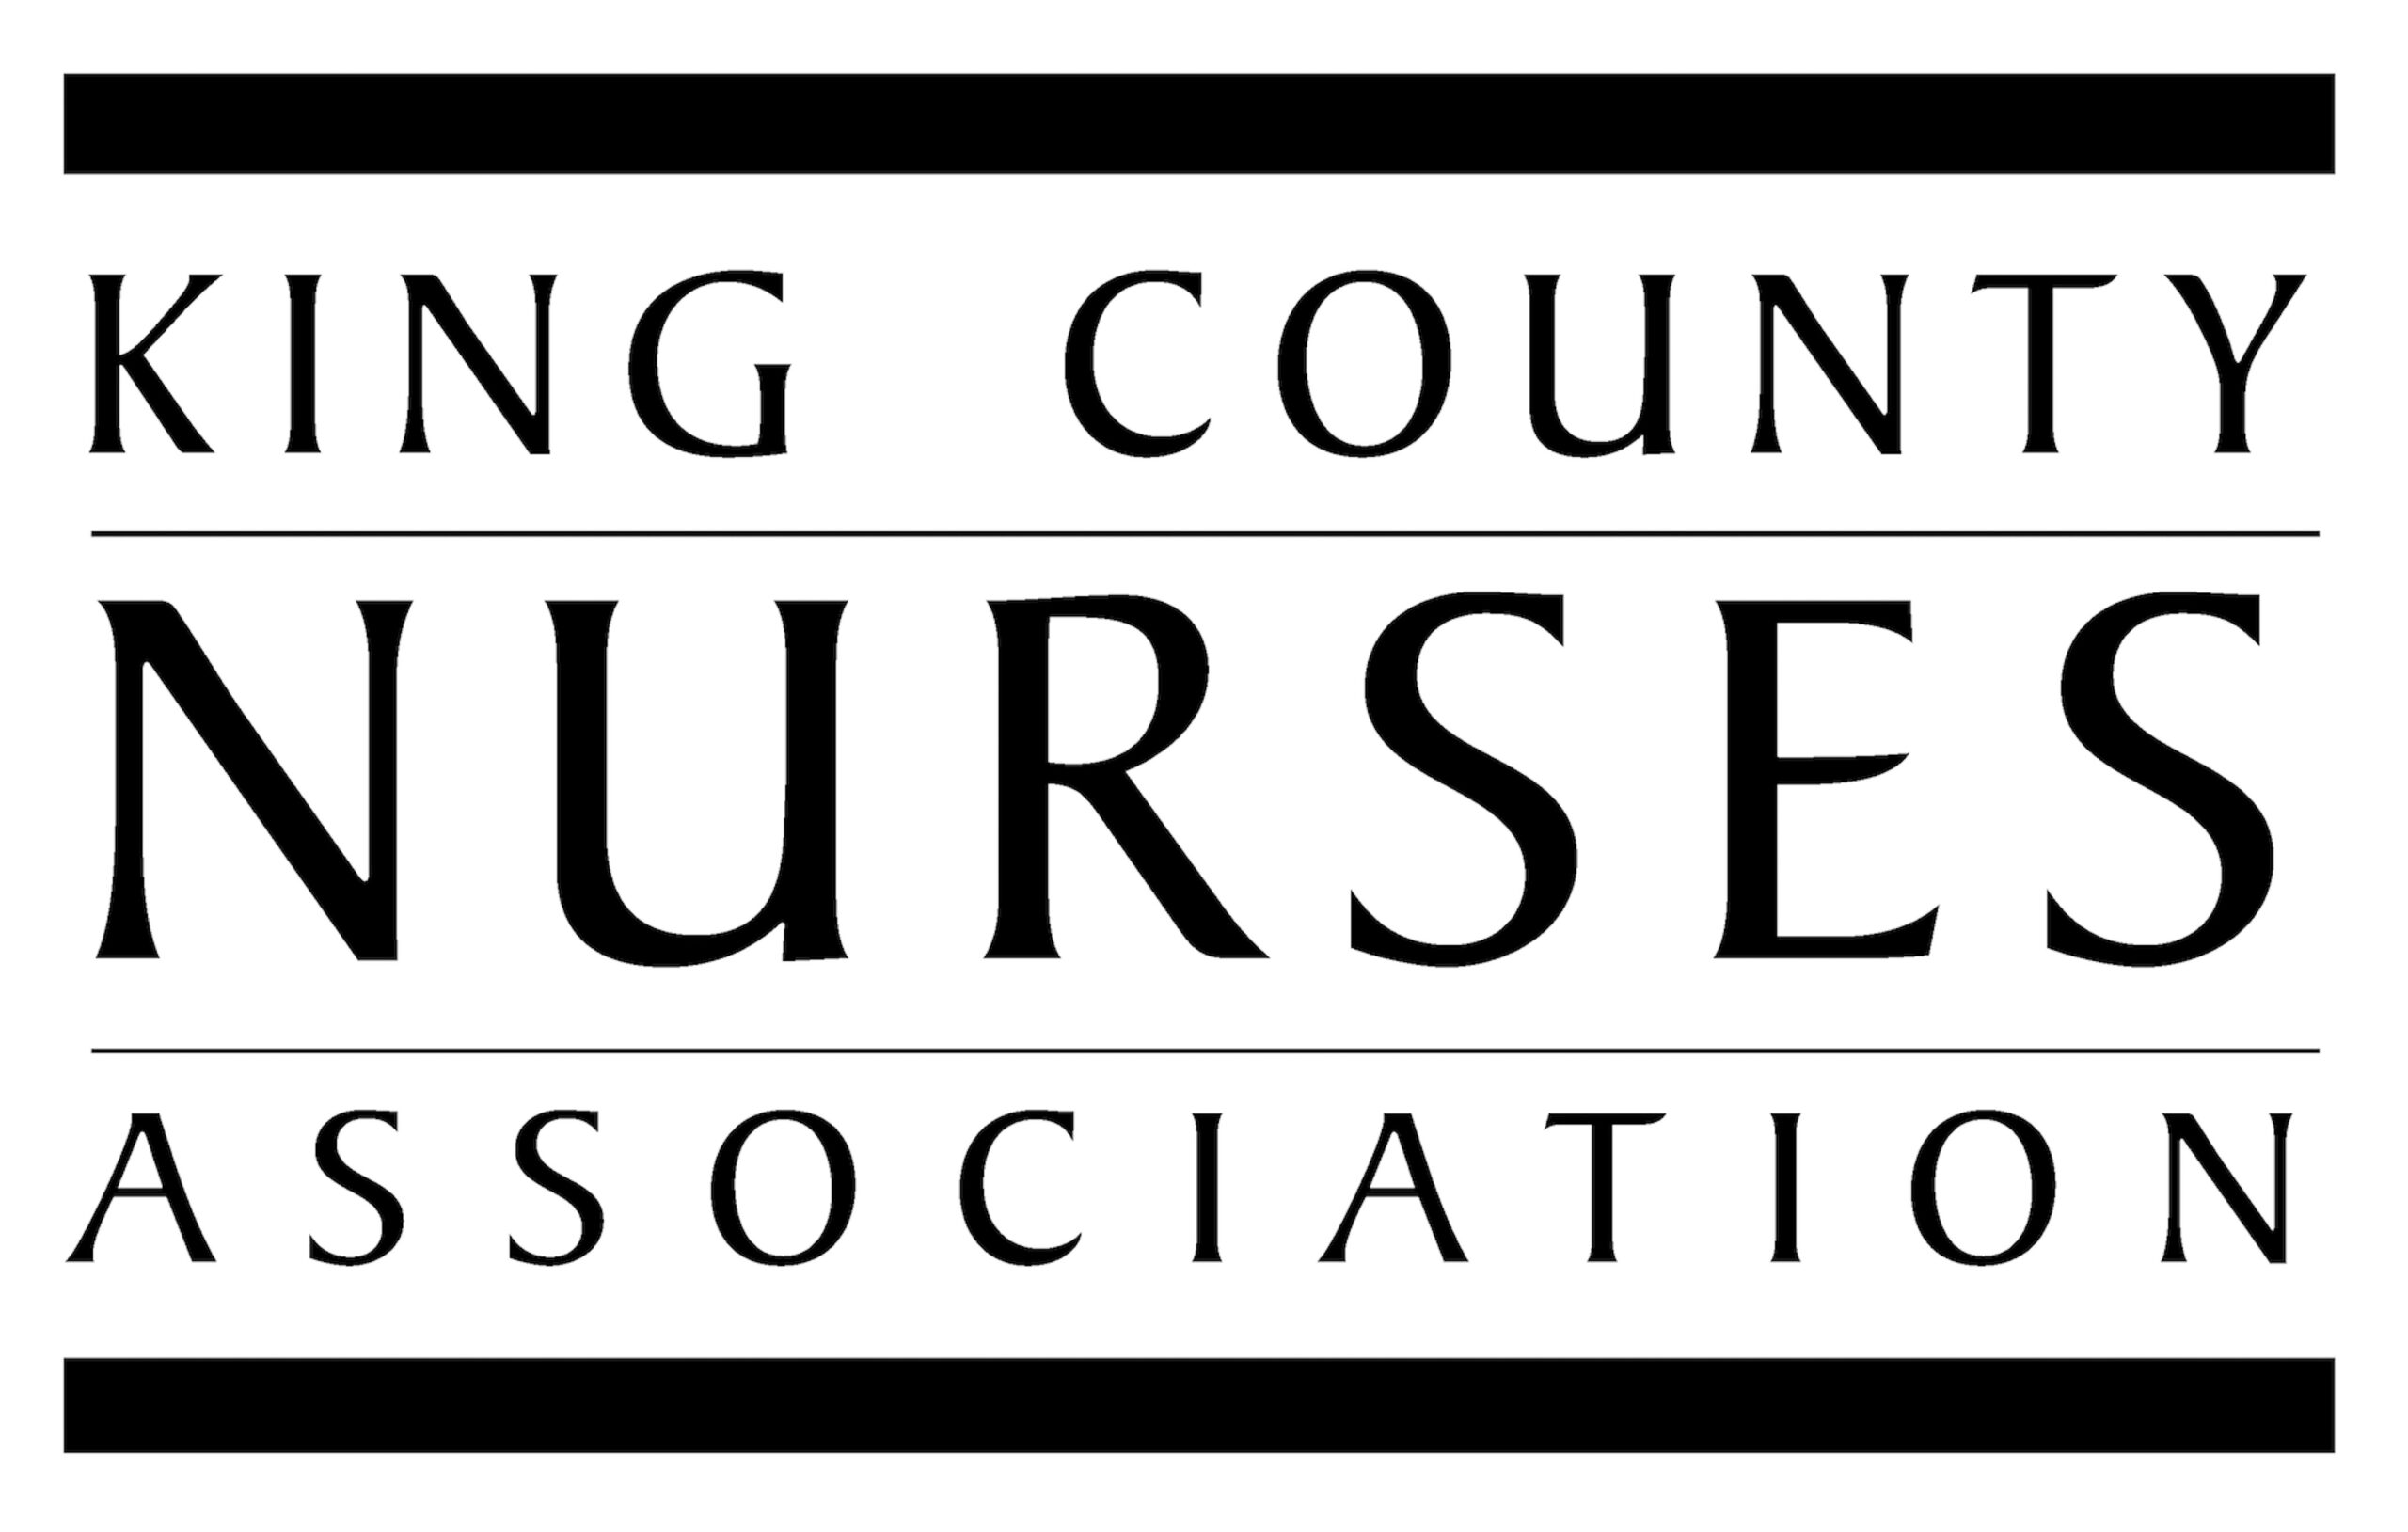 King County Nurses Association